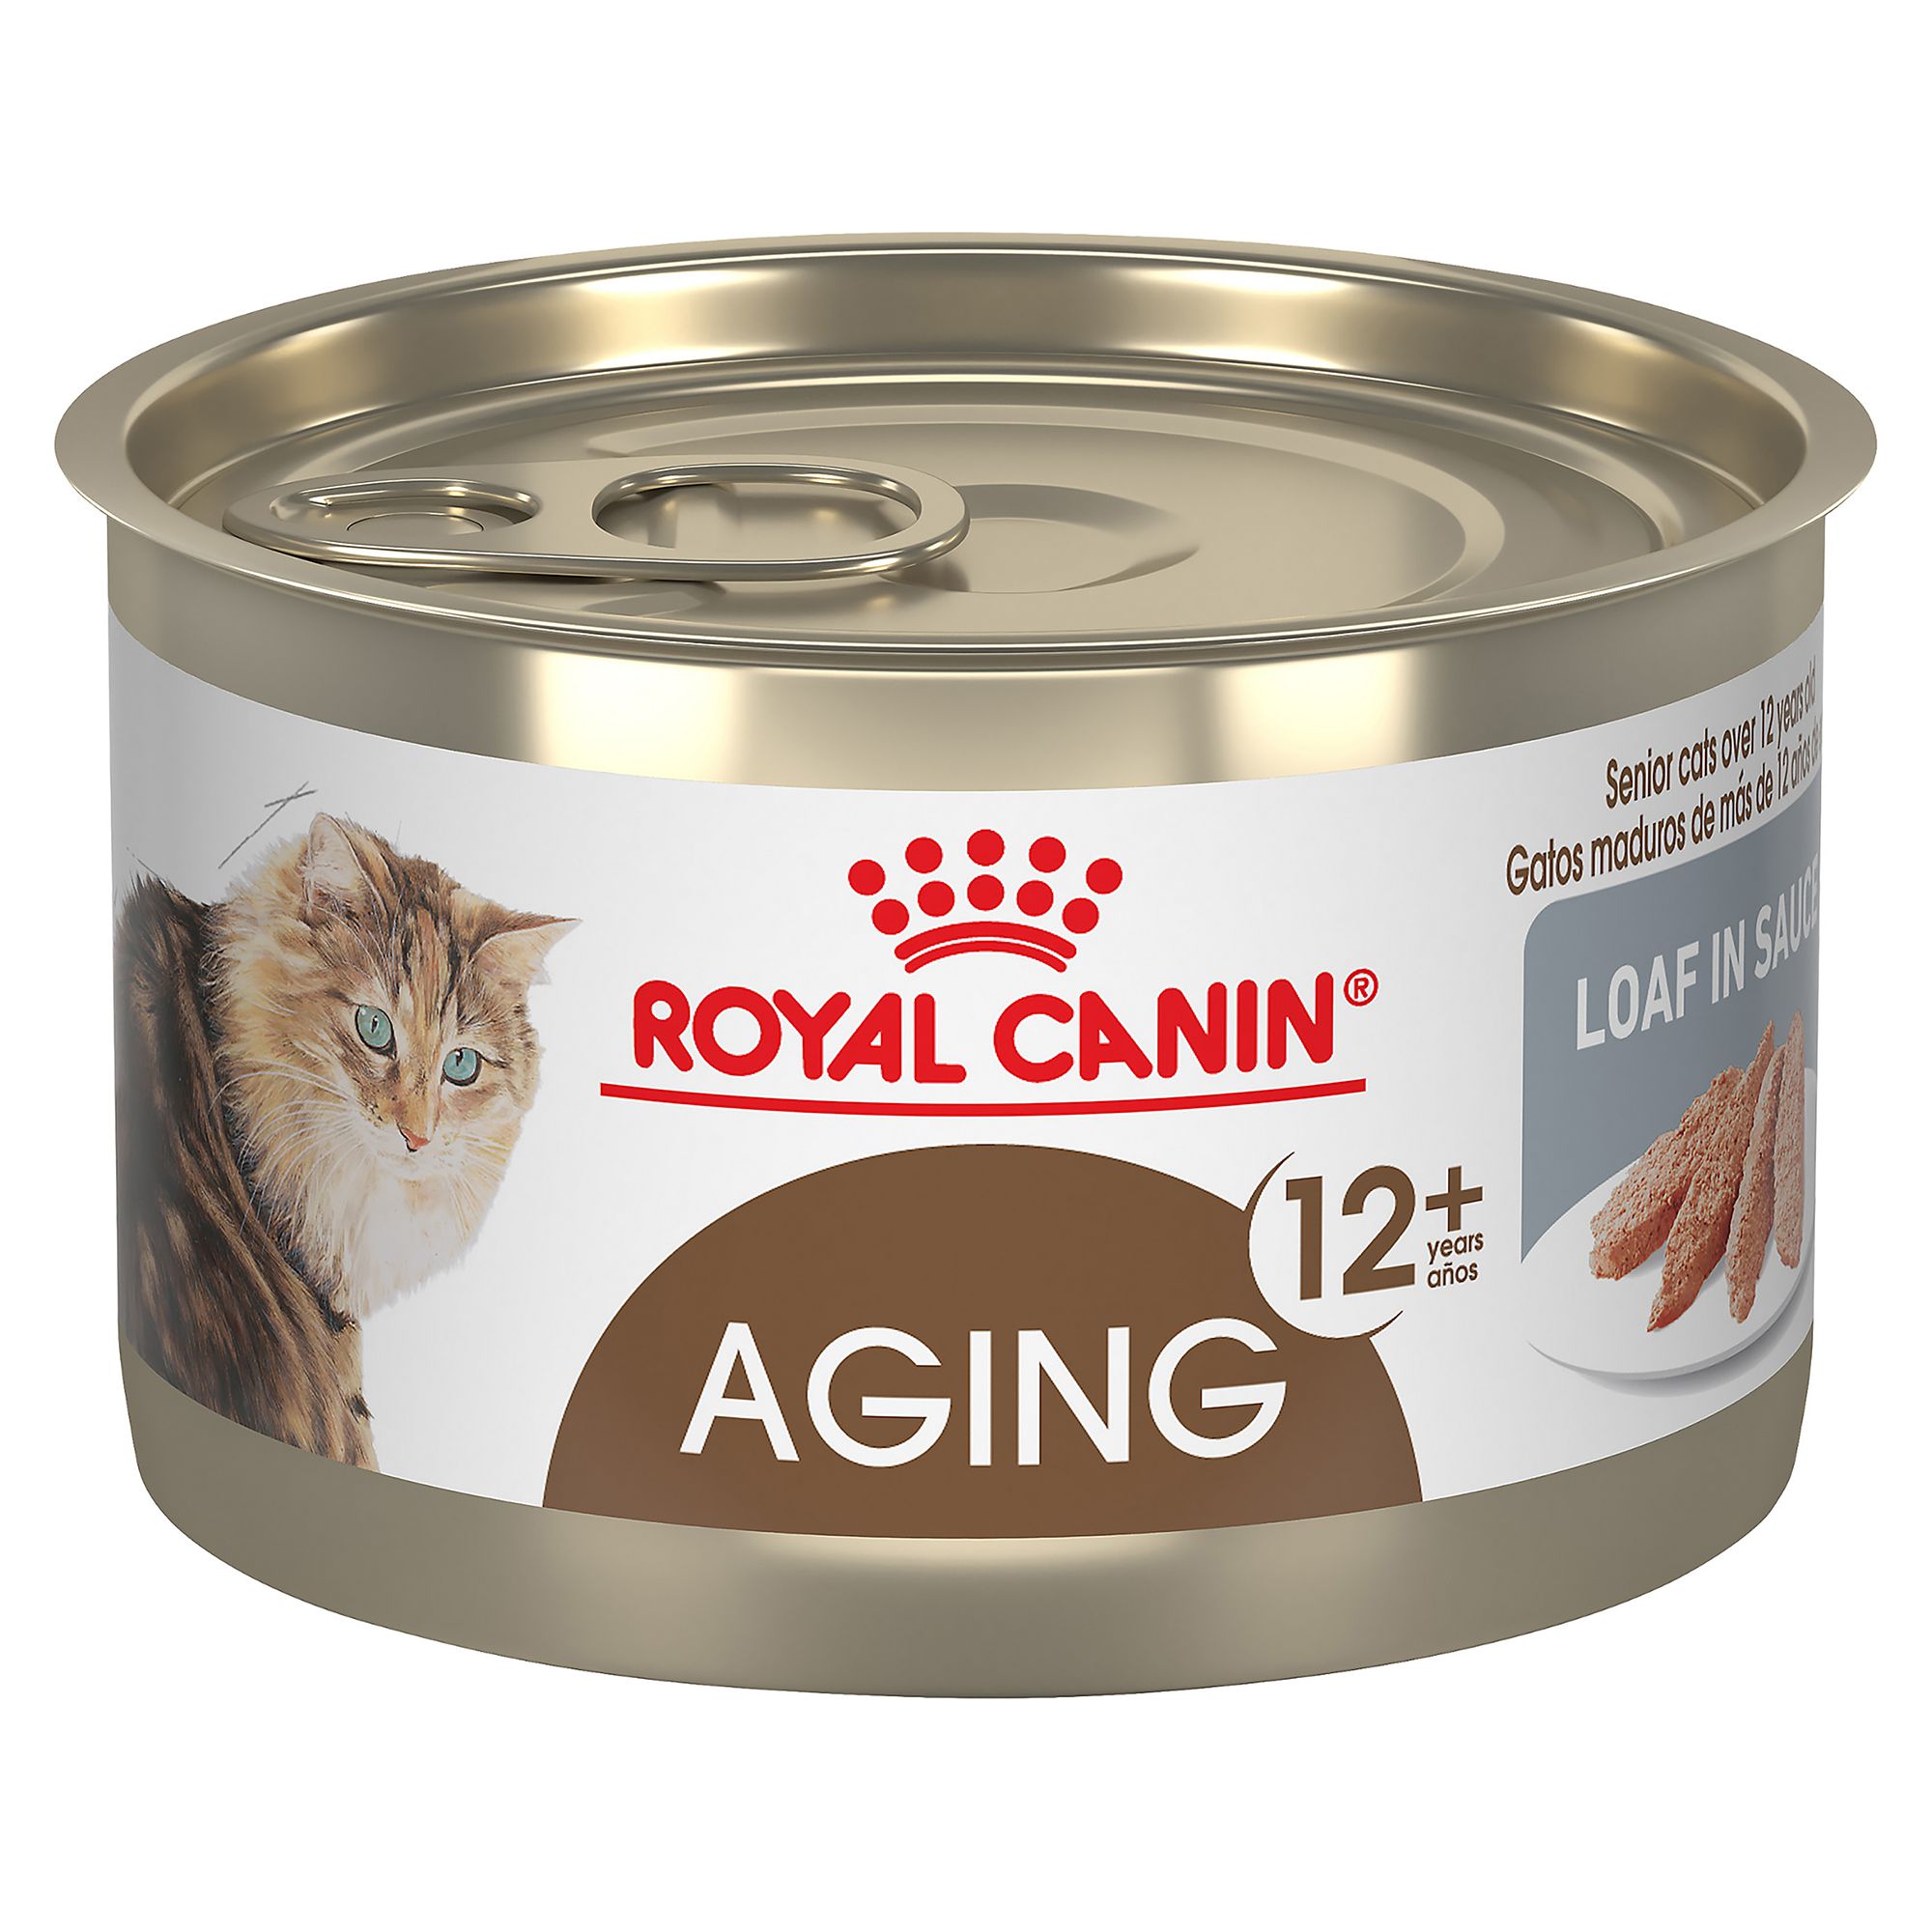 Royal Canin® Dog Food & PetSmart